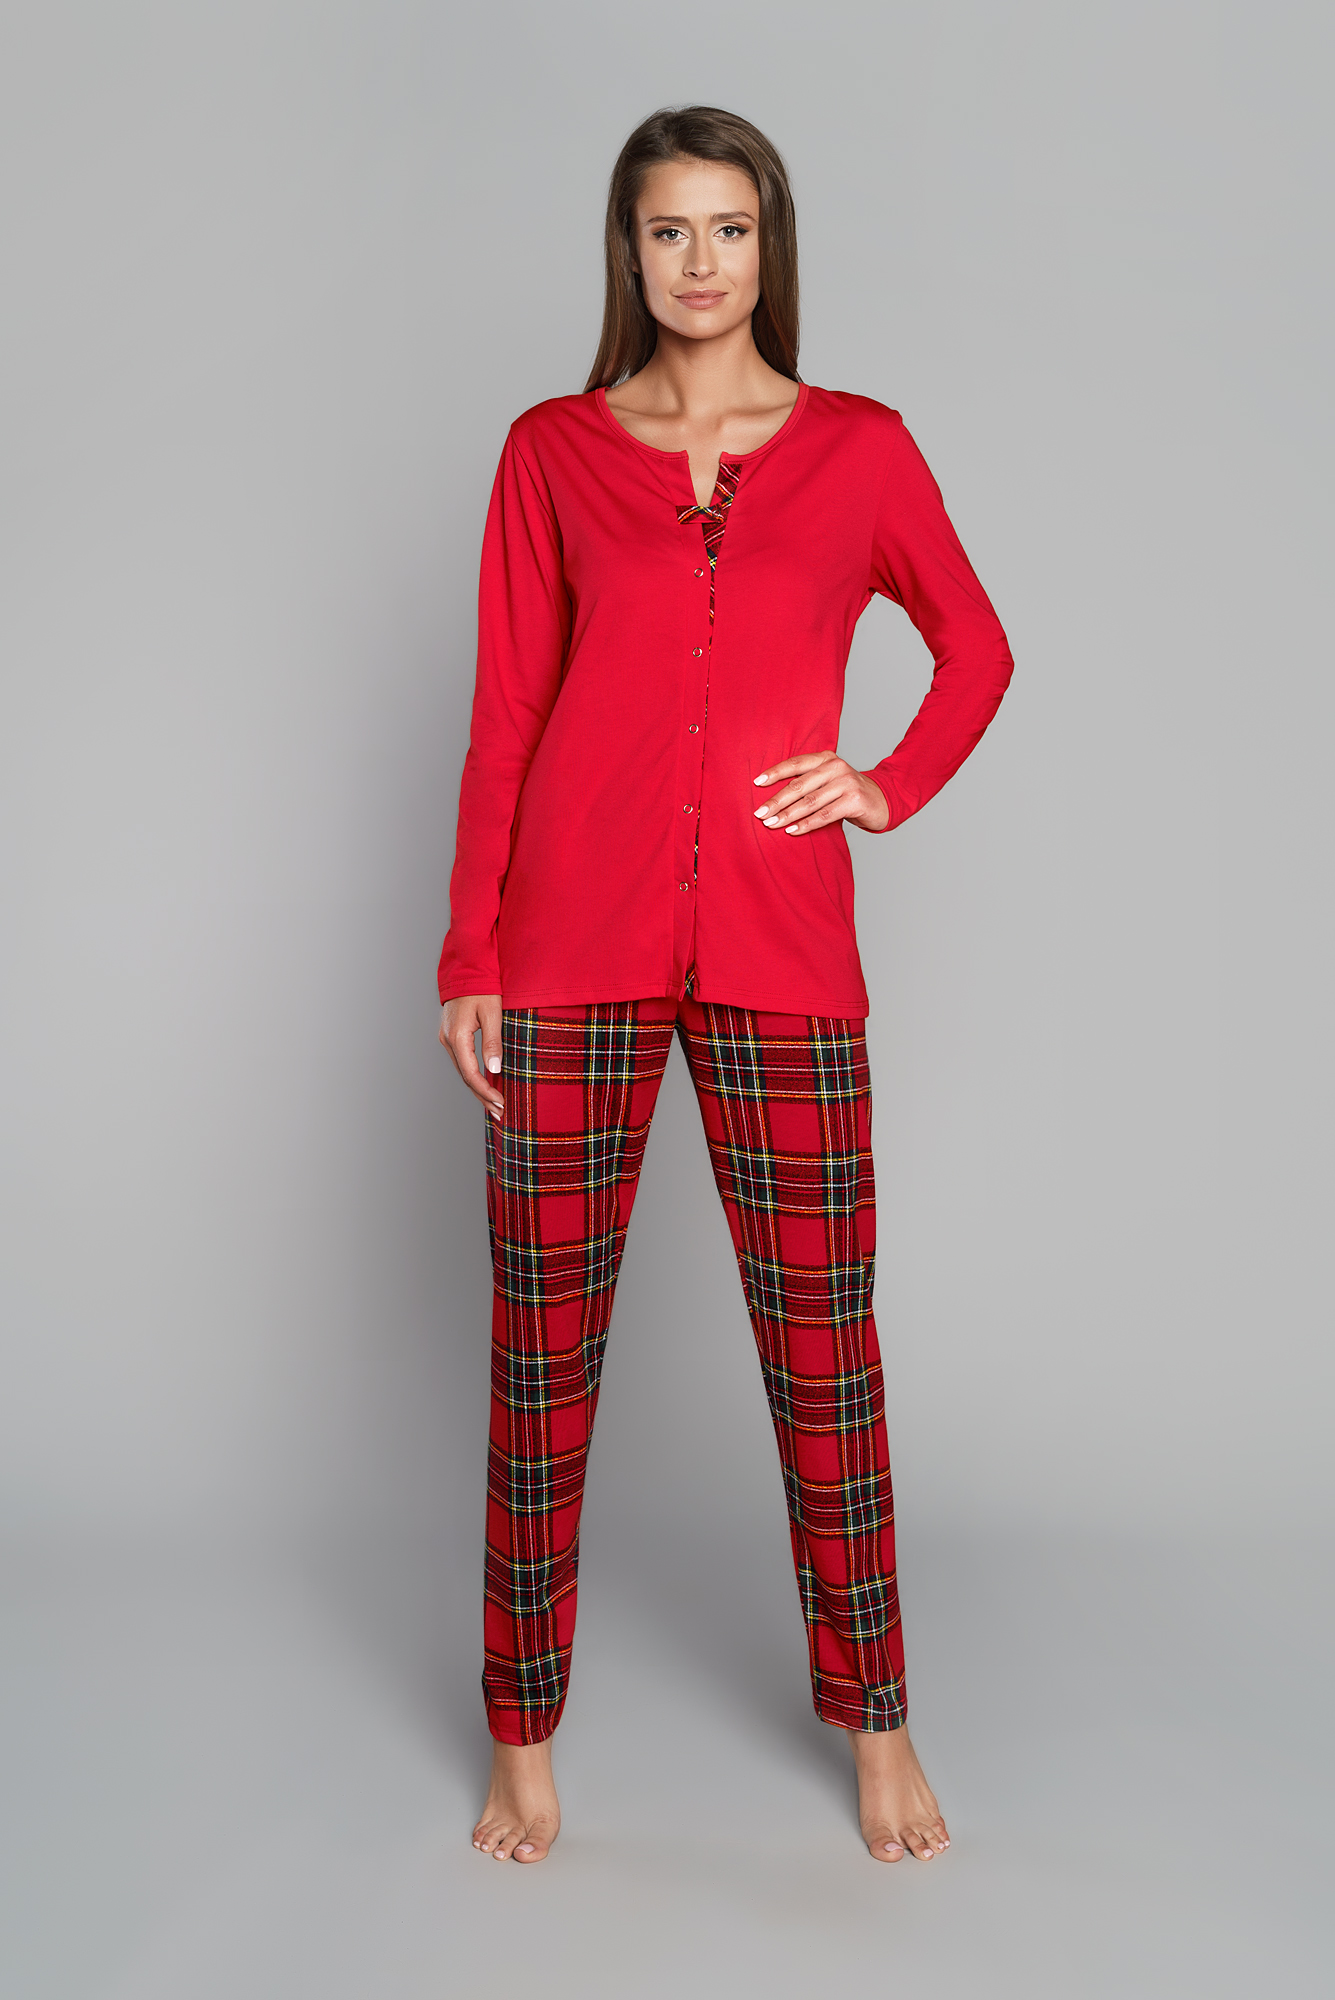 Zorza Women's Pyjamas - Long Sleeves, Long Legs - Red/print